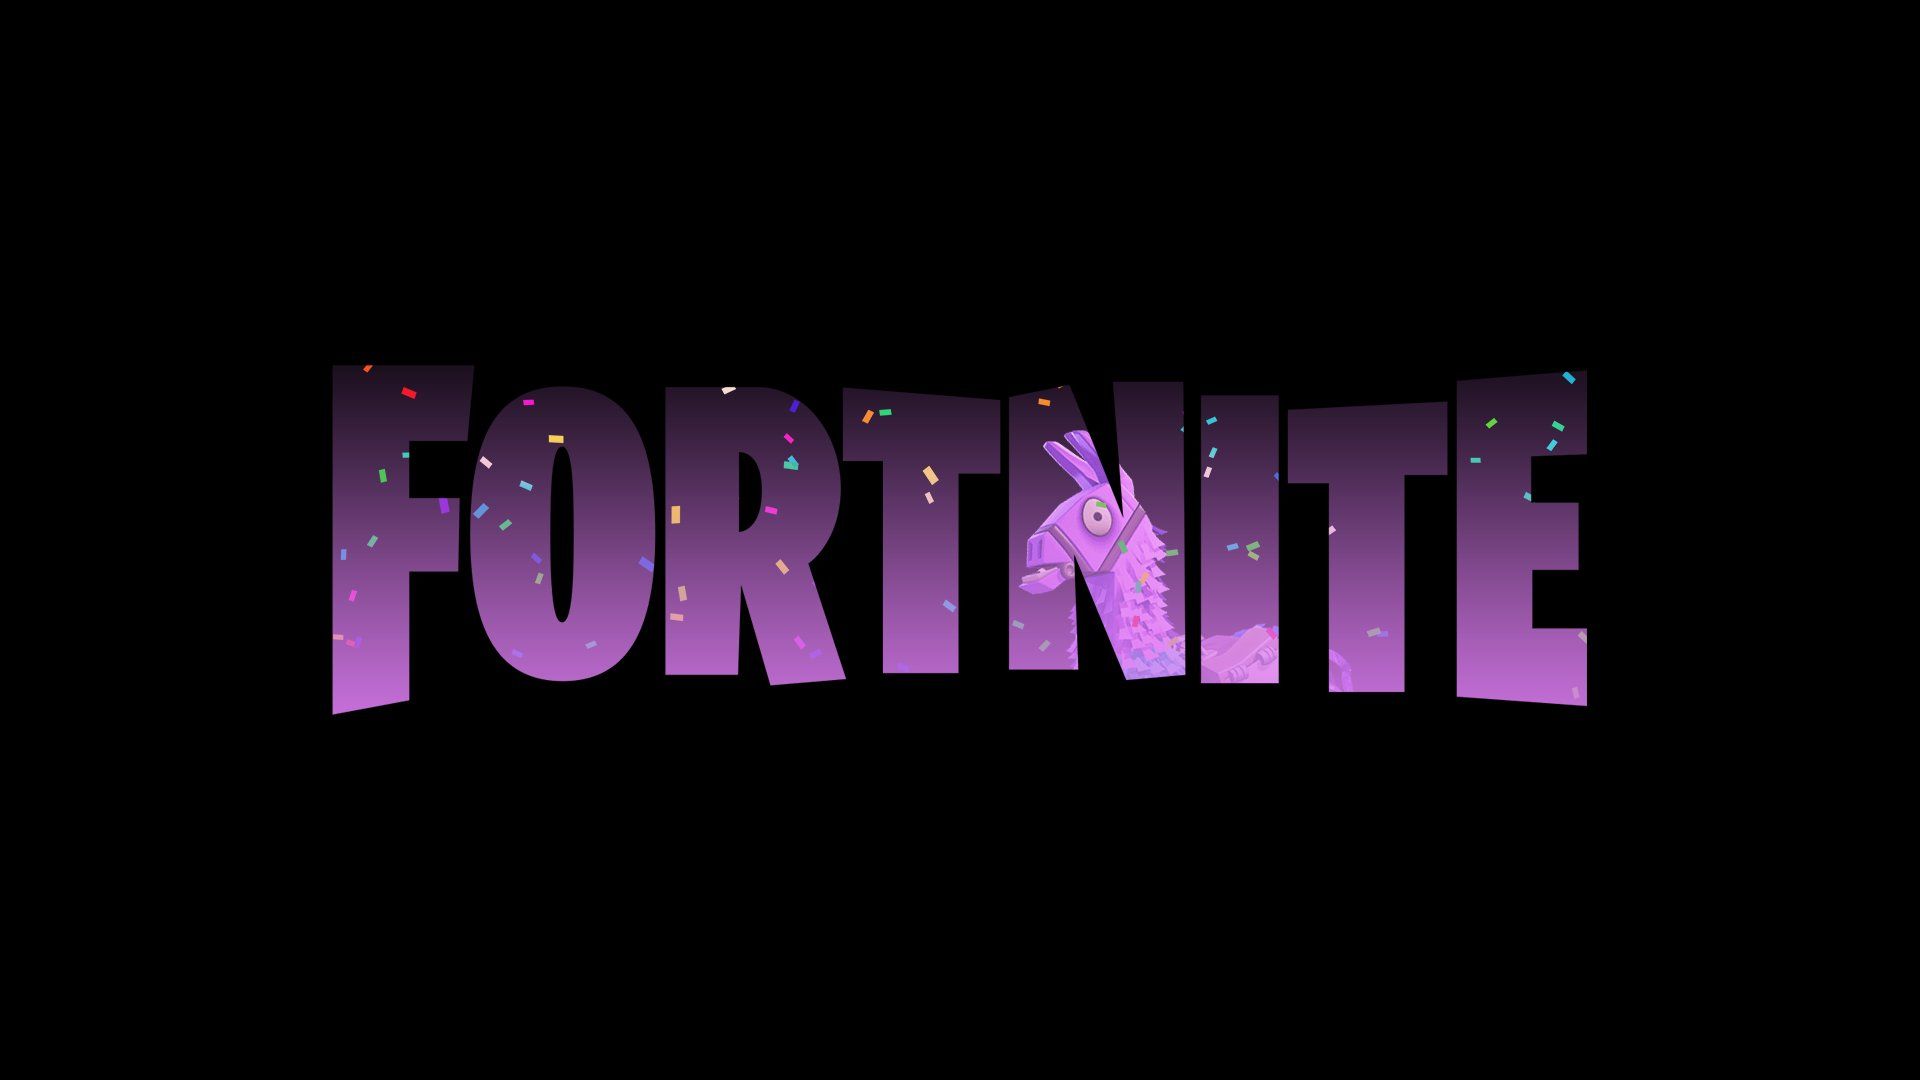 Fortnite wallpaper with the word Fortnite and a purple llama - Fortnite